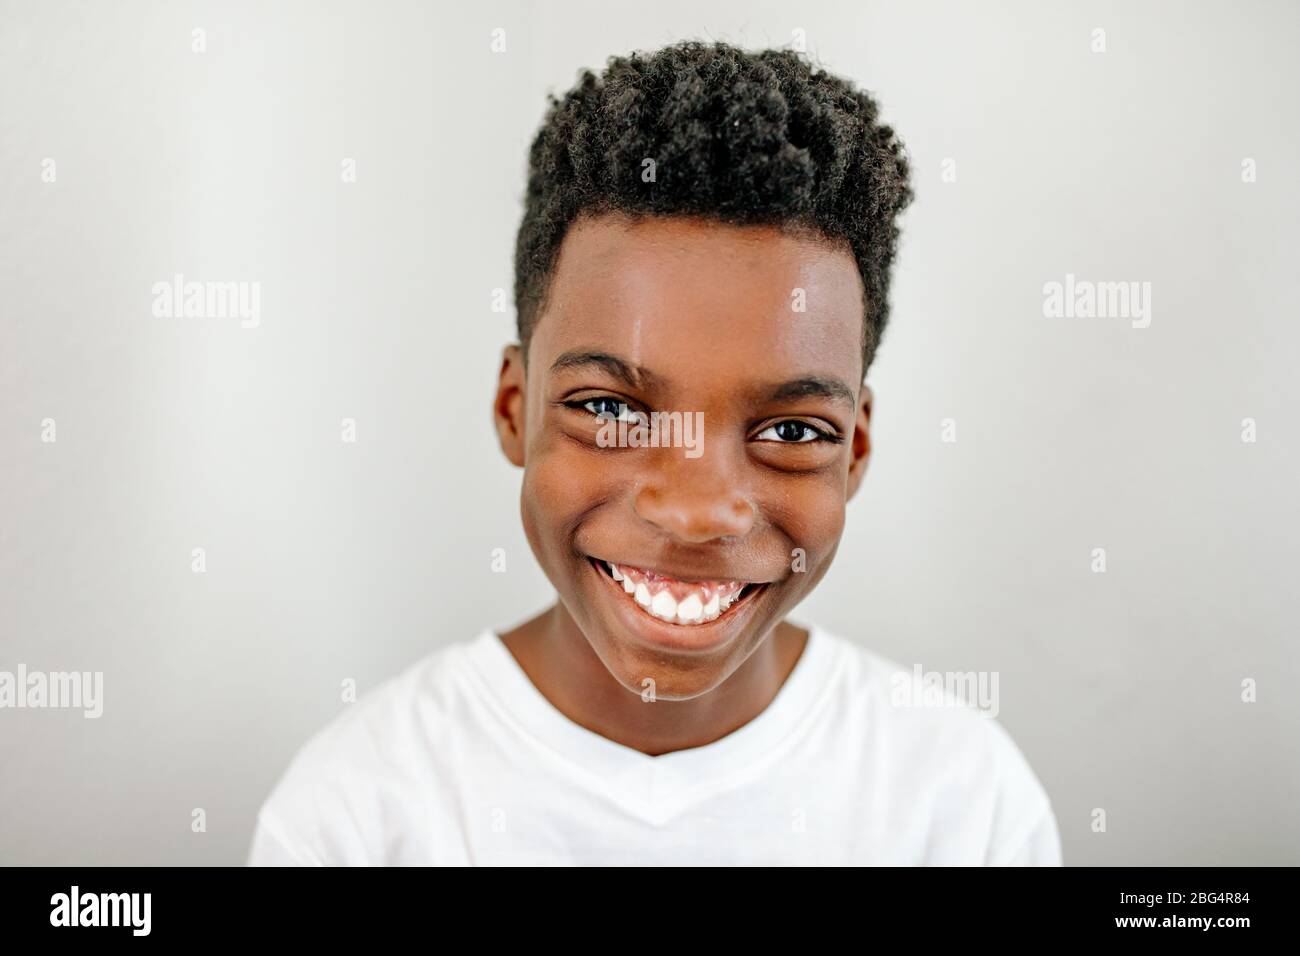 Headshot of sweet smiling black preteen boy wearing white t-shirt Stock Photo